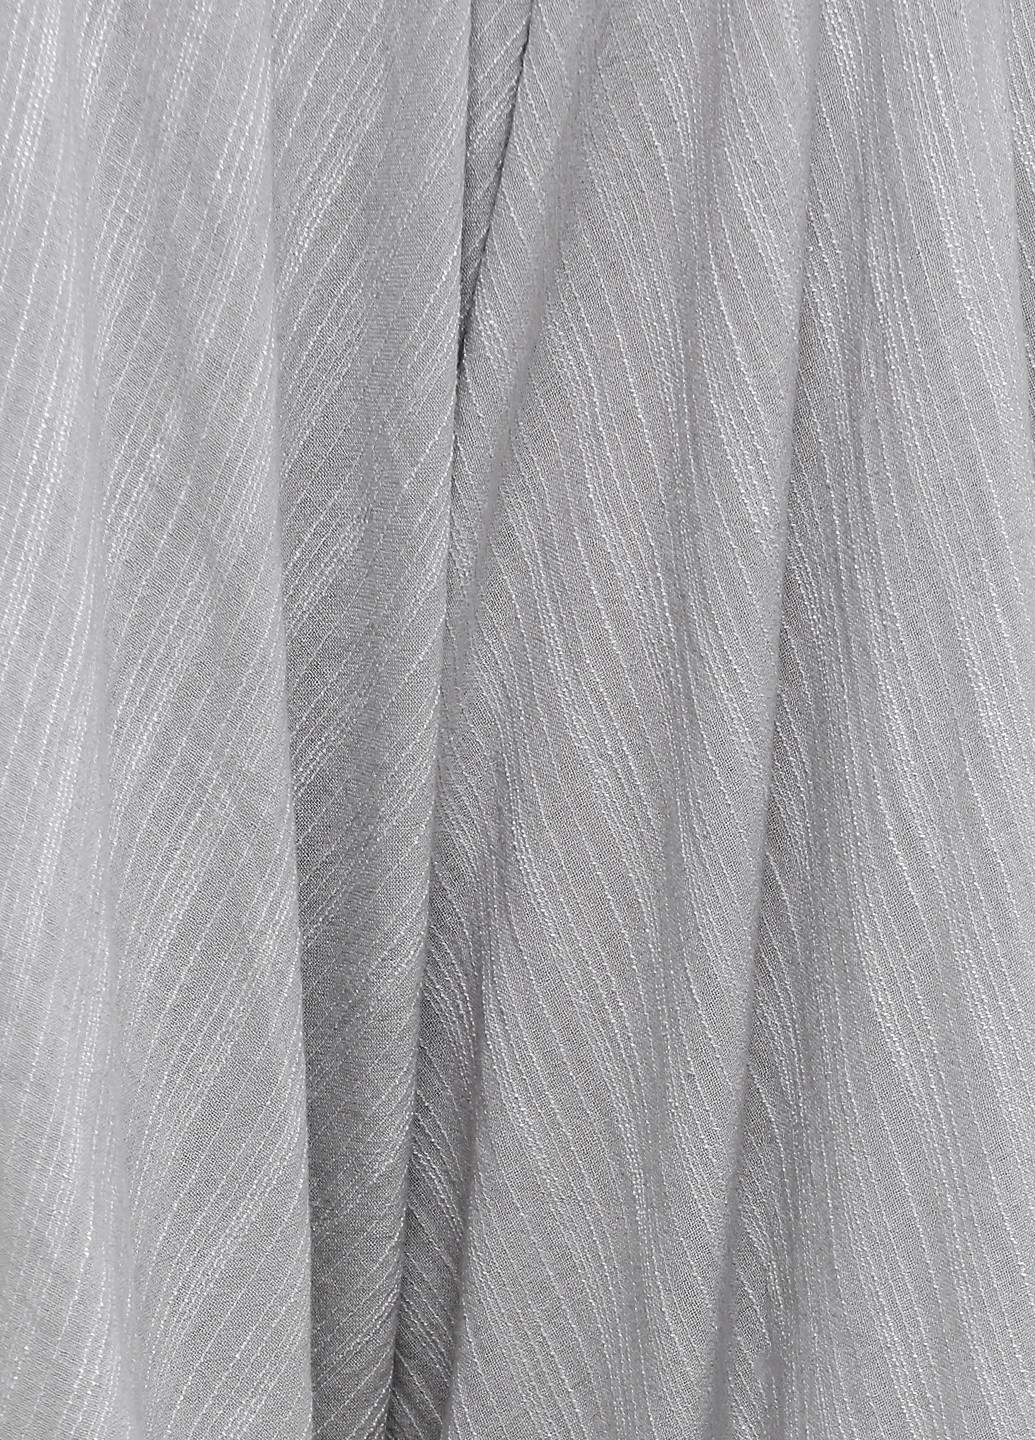 Комбинезон Made in Italy комбинезон-шорты полоска светло-серый кэжуал лен